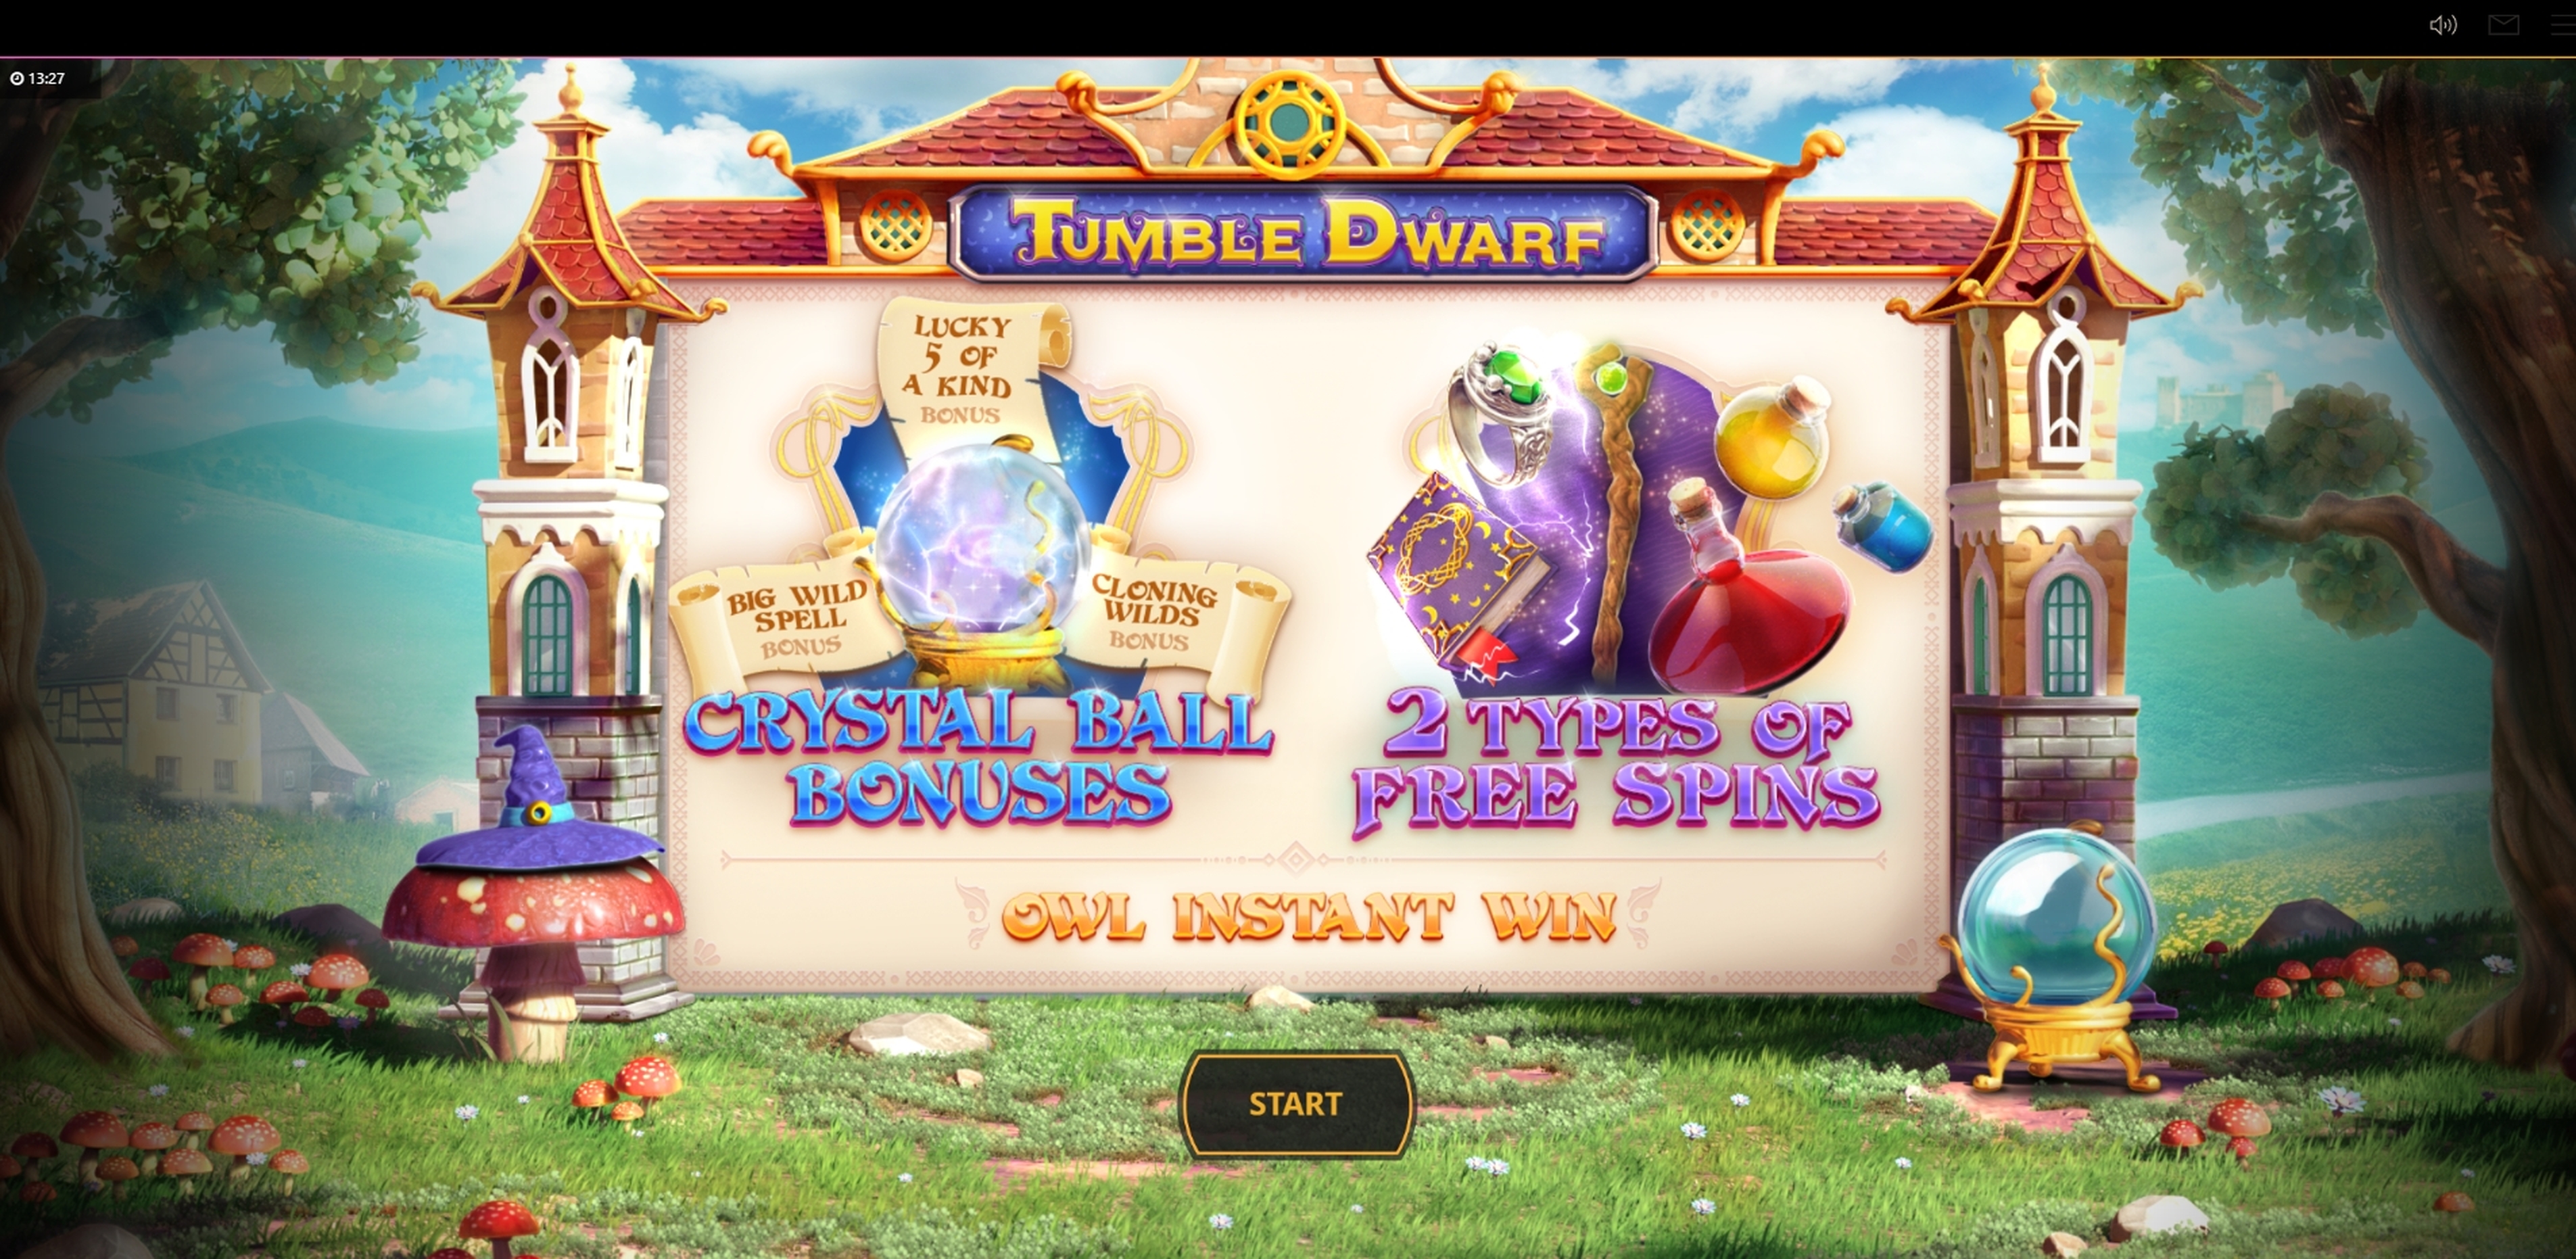 Play Tumble Dwarf Free Casino Slot Game by Cayetano Gaming